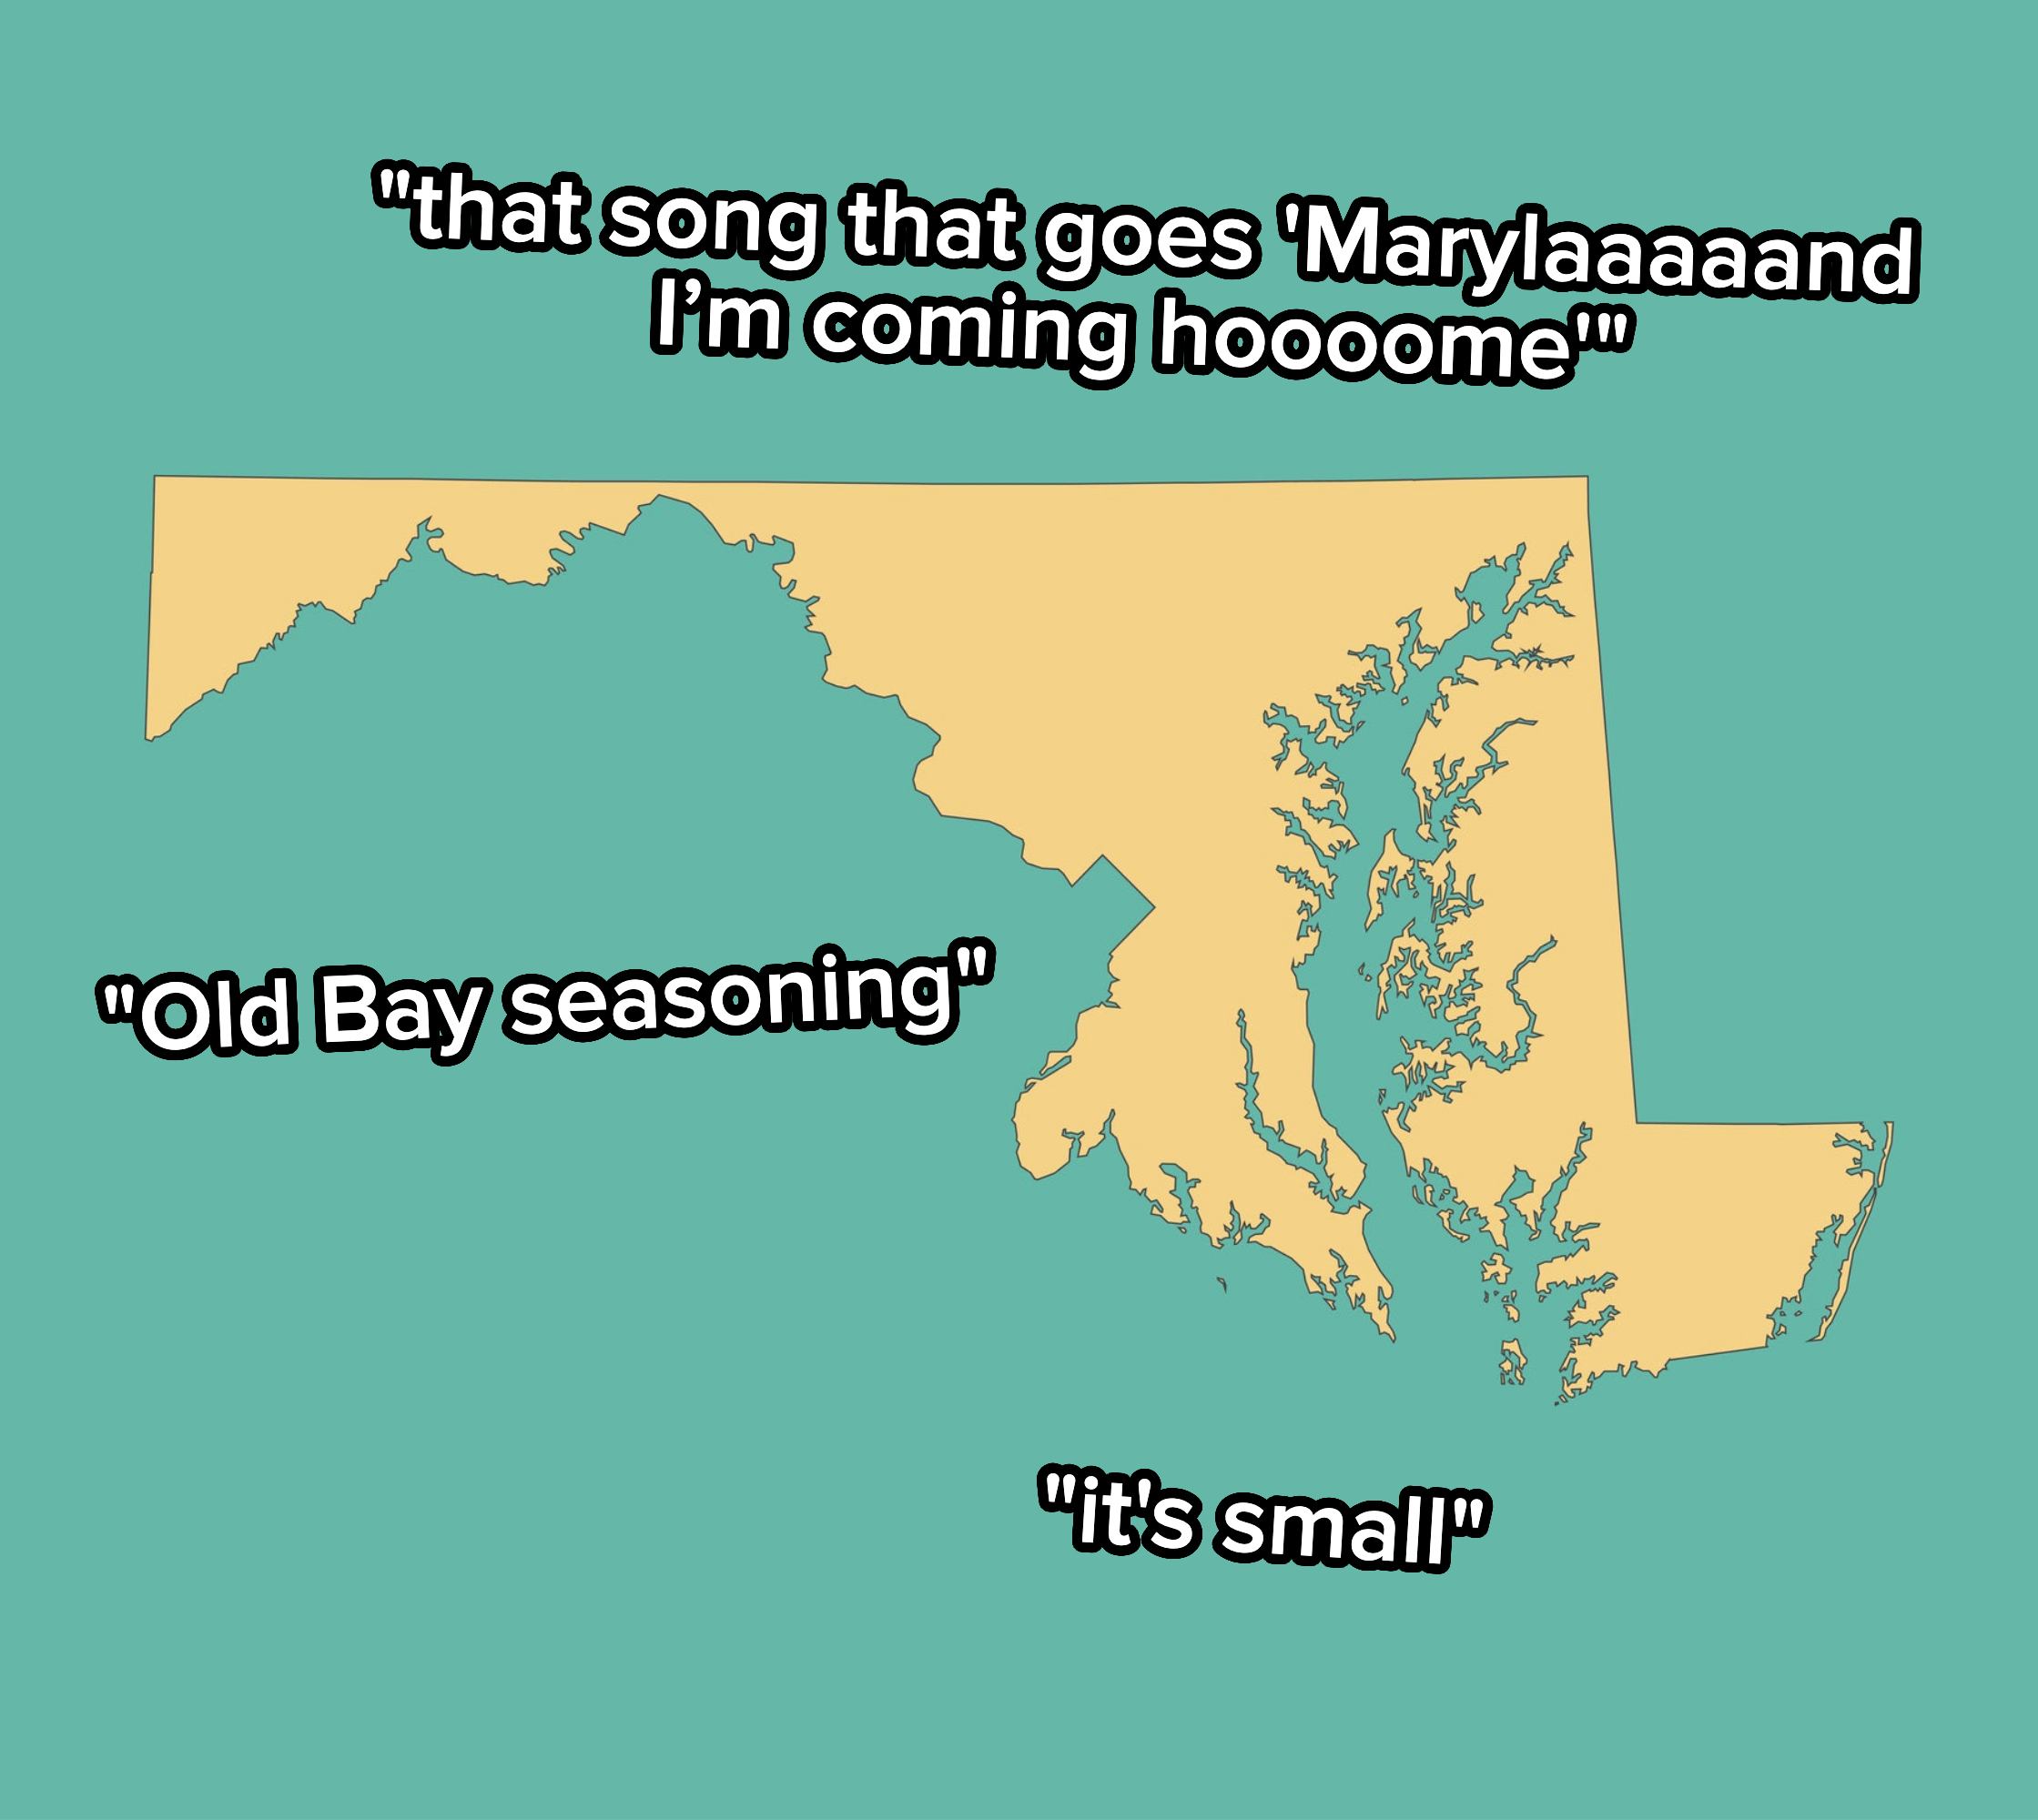 Maryland outline